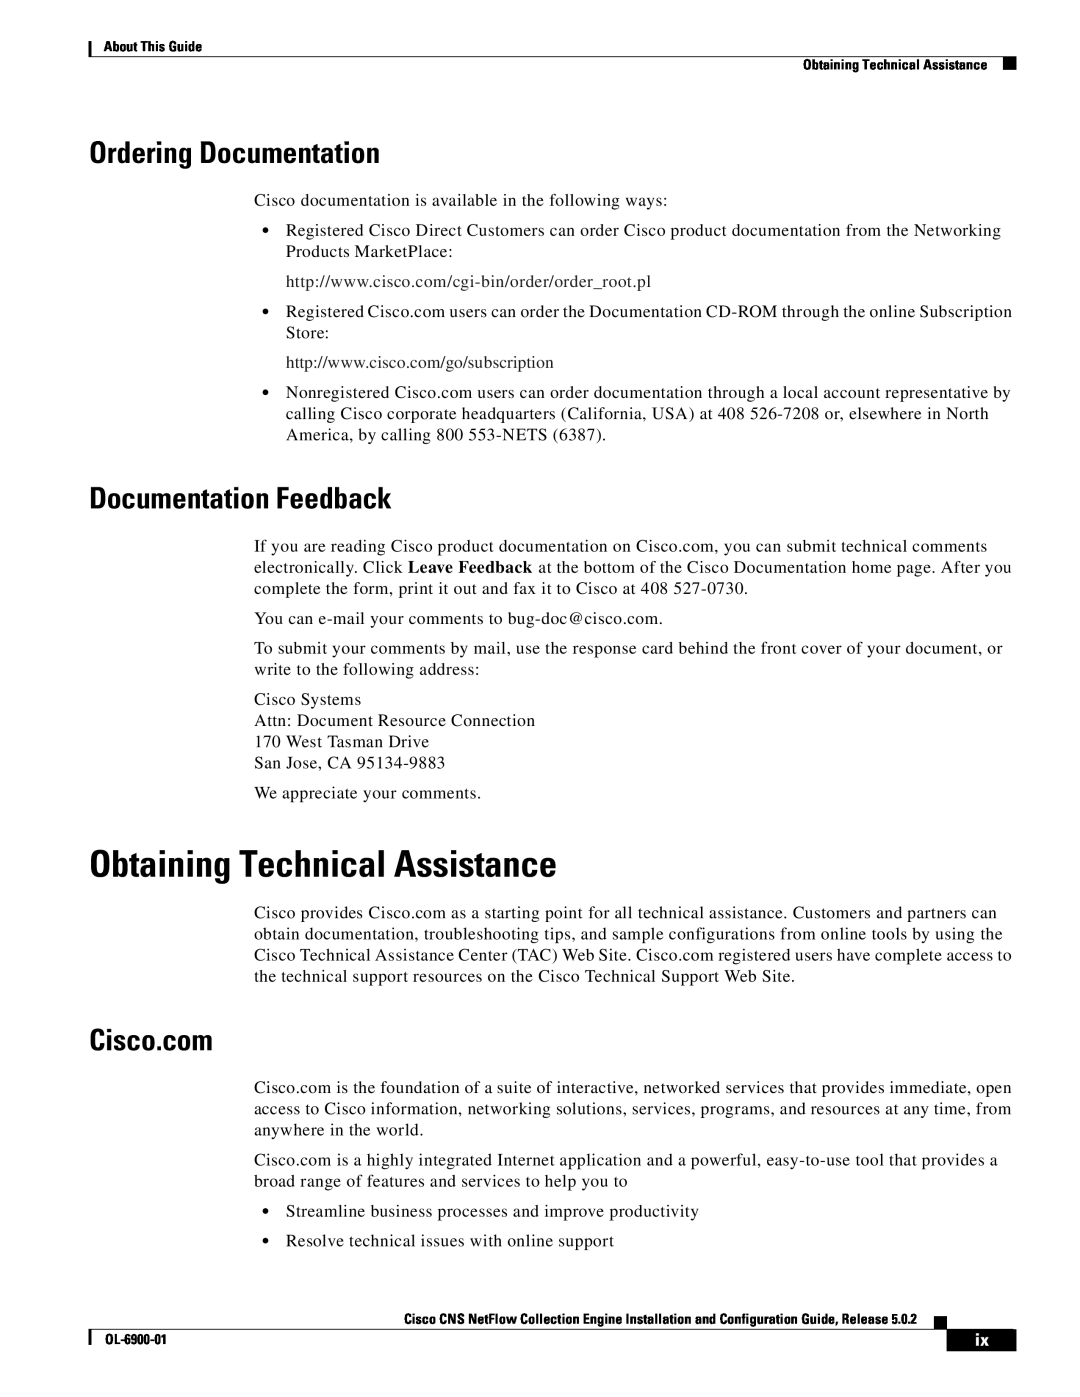 Cisco Systems OL-6900-01 manual Obtaining Technical Assistance, Ordering Documentation, Documentation Feedback, Cisco.com 